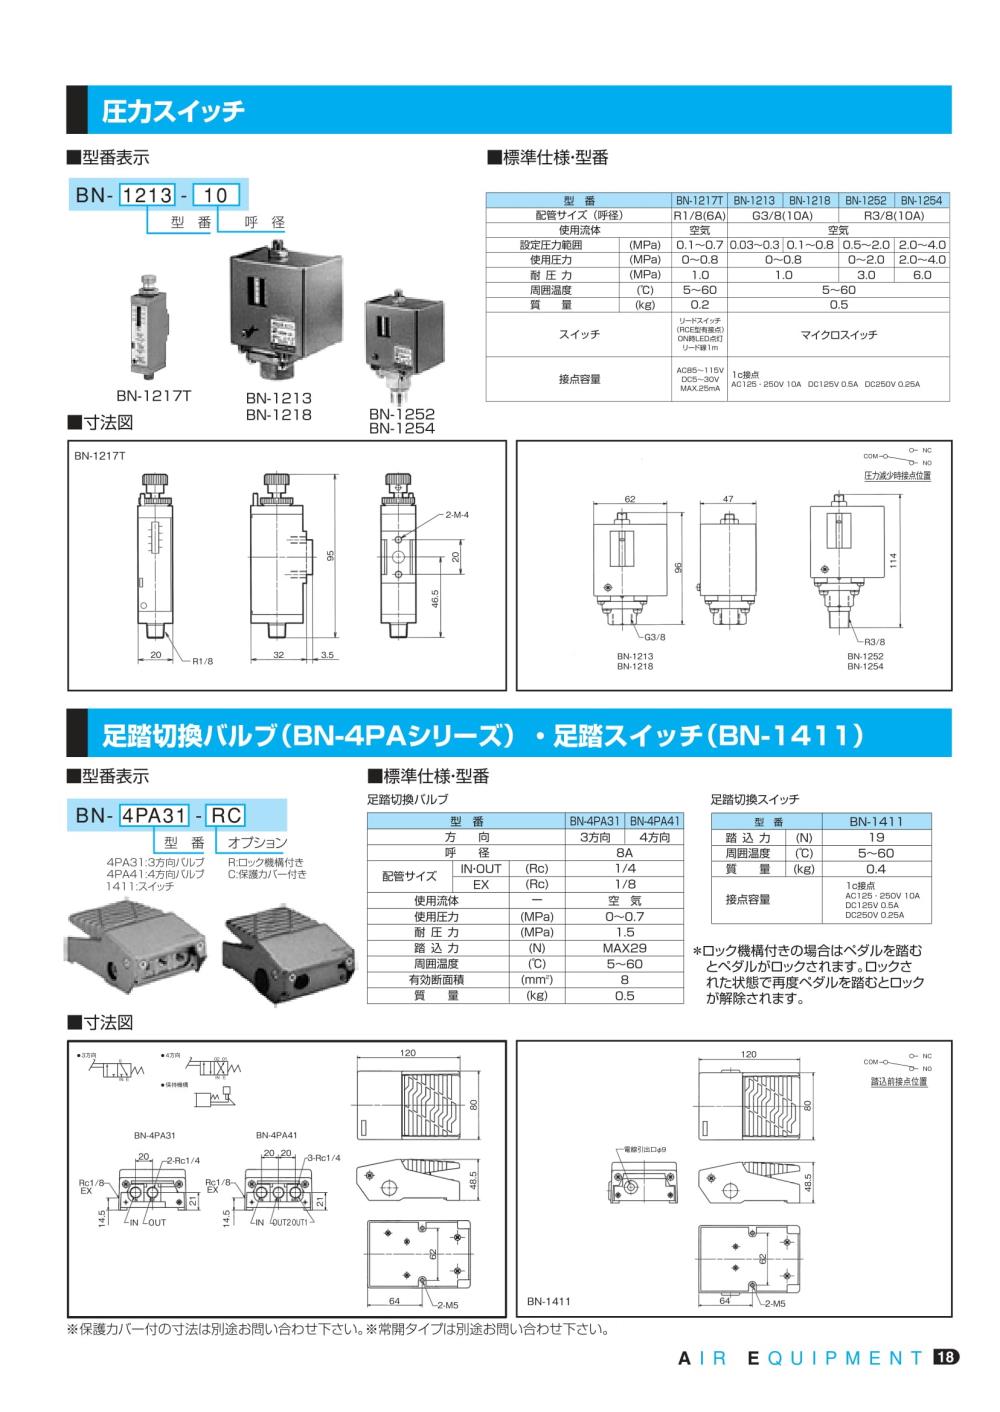 NIHON SEIKI Pressure Switch BN-1252 Series